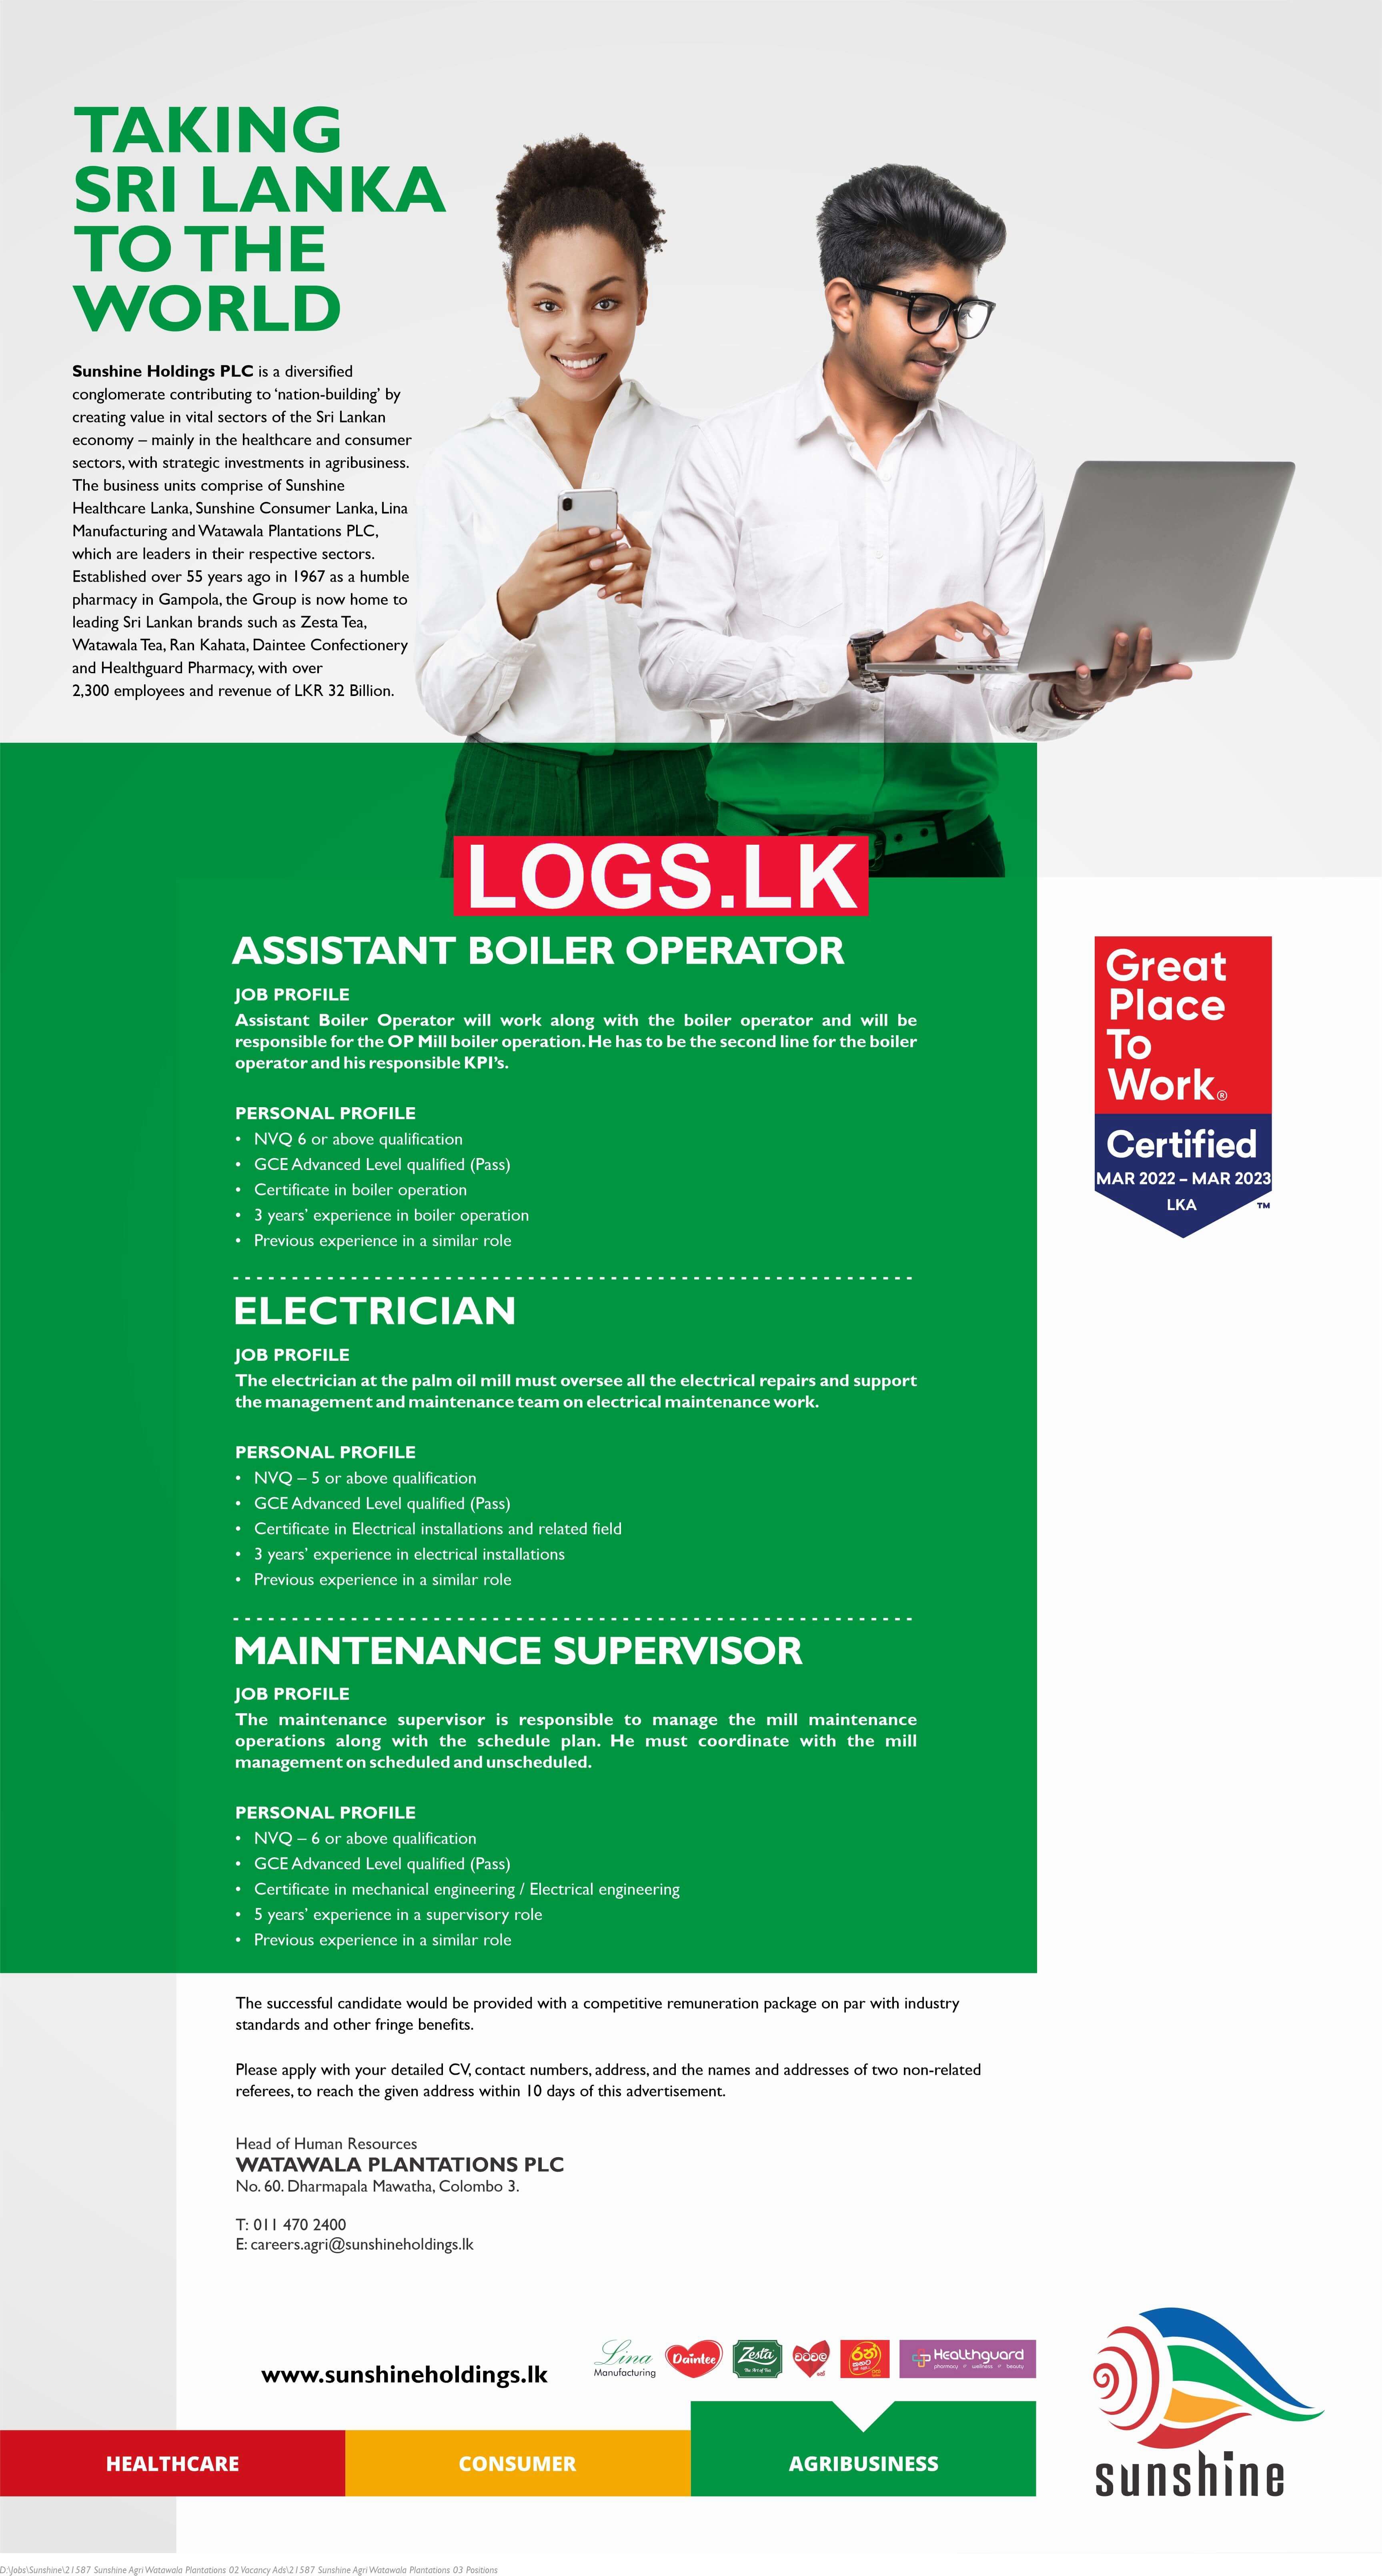 Assistant Boiler Operator / Electrician / Maintenance Supervisor Vacancies at Sunshine Holdings Job Vacancies